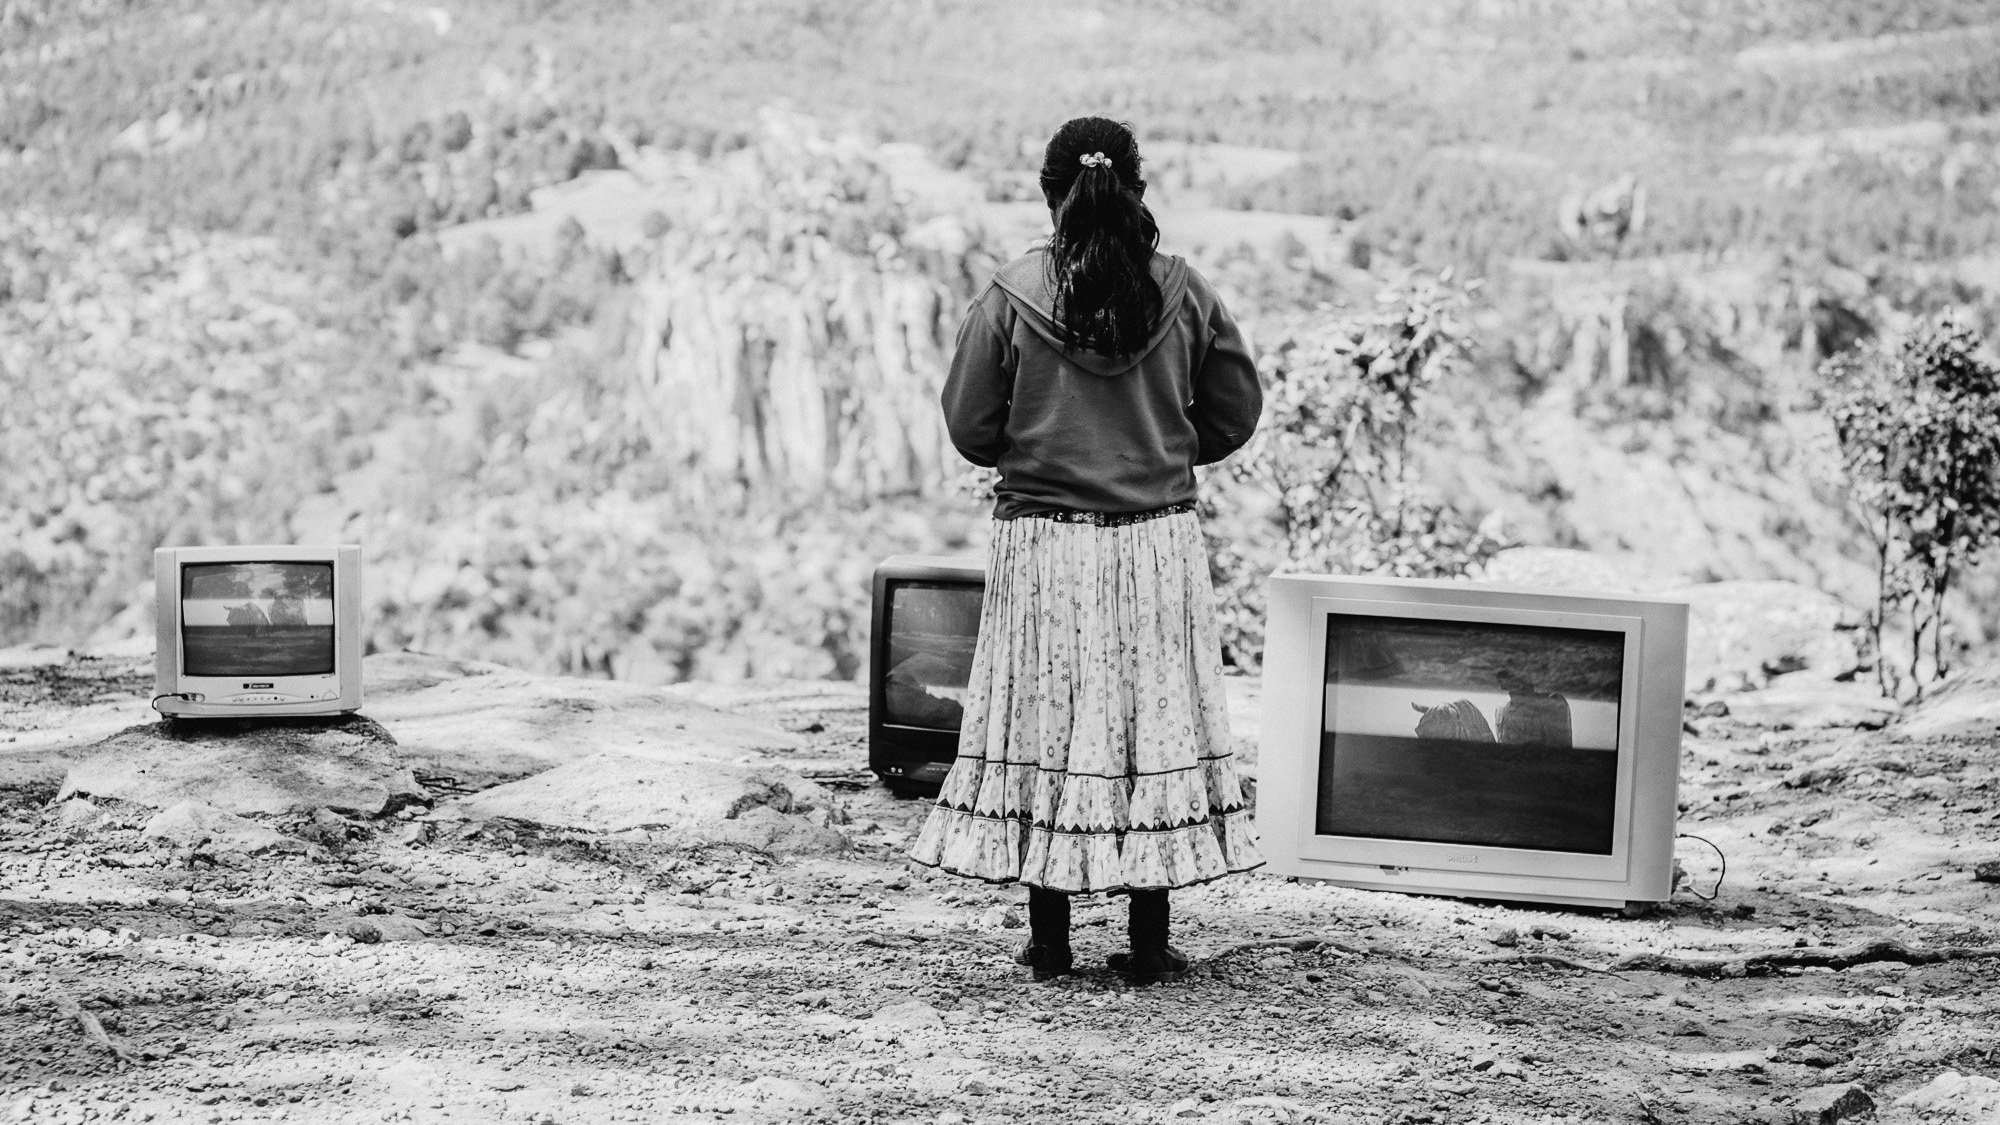 TarahumaraProject_LeoMartinez-photo_PedroValiente-director.jpg